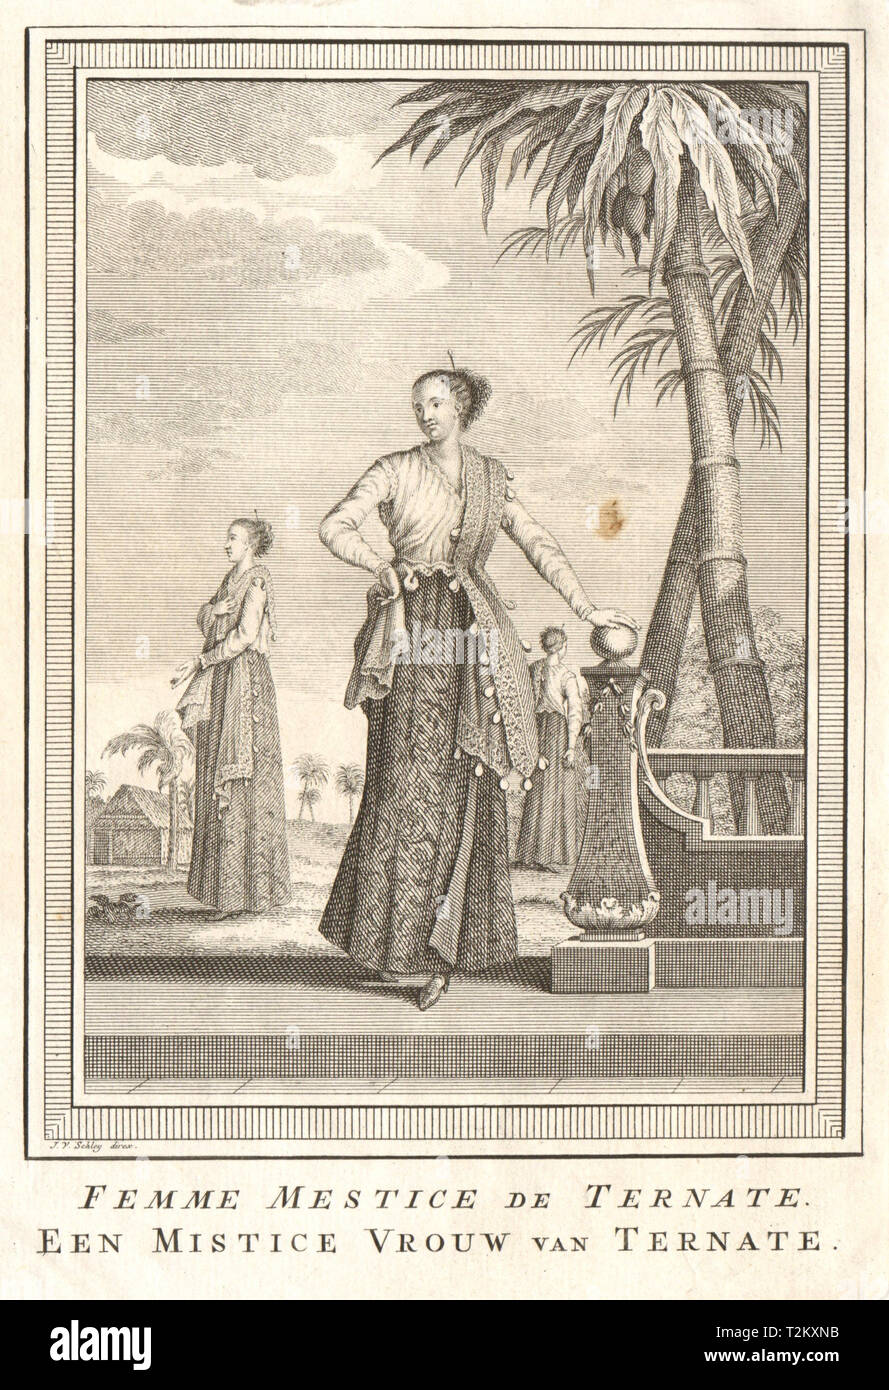 'Femme Mestice de Ternate'. Mestizo woman, Ternate, Maluku islands. SCHLEY 1755 Stock Photo